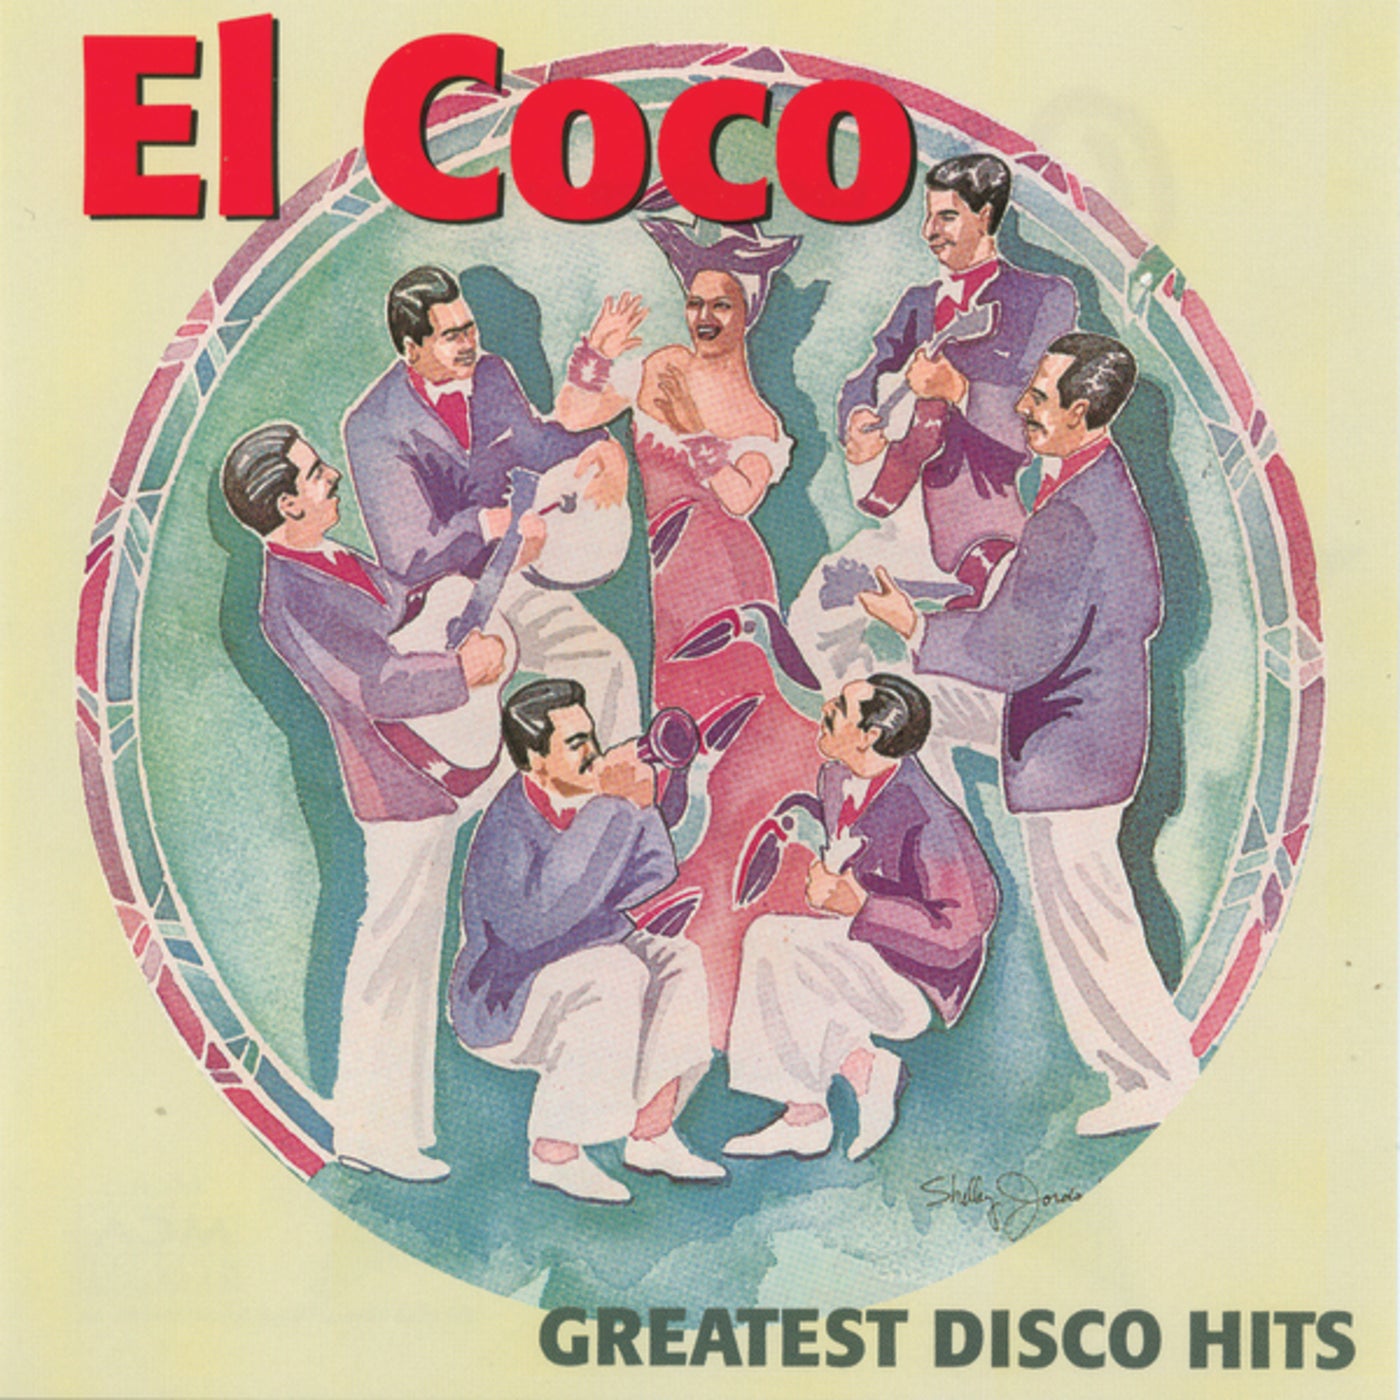 Greatest Disco Hits